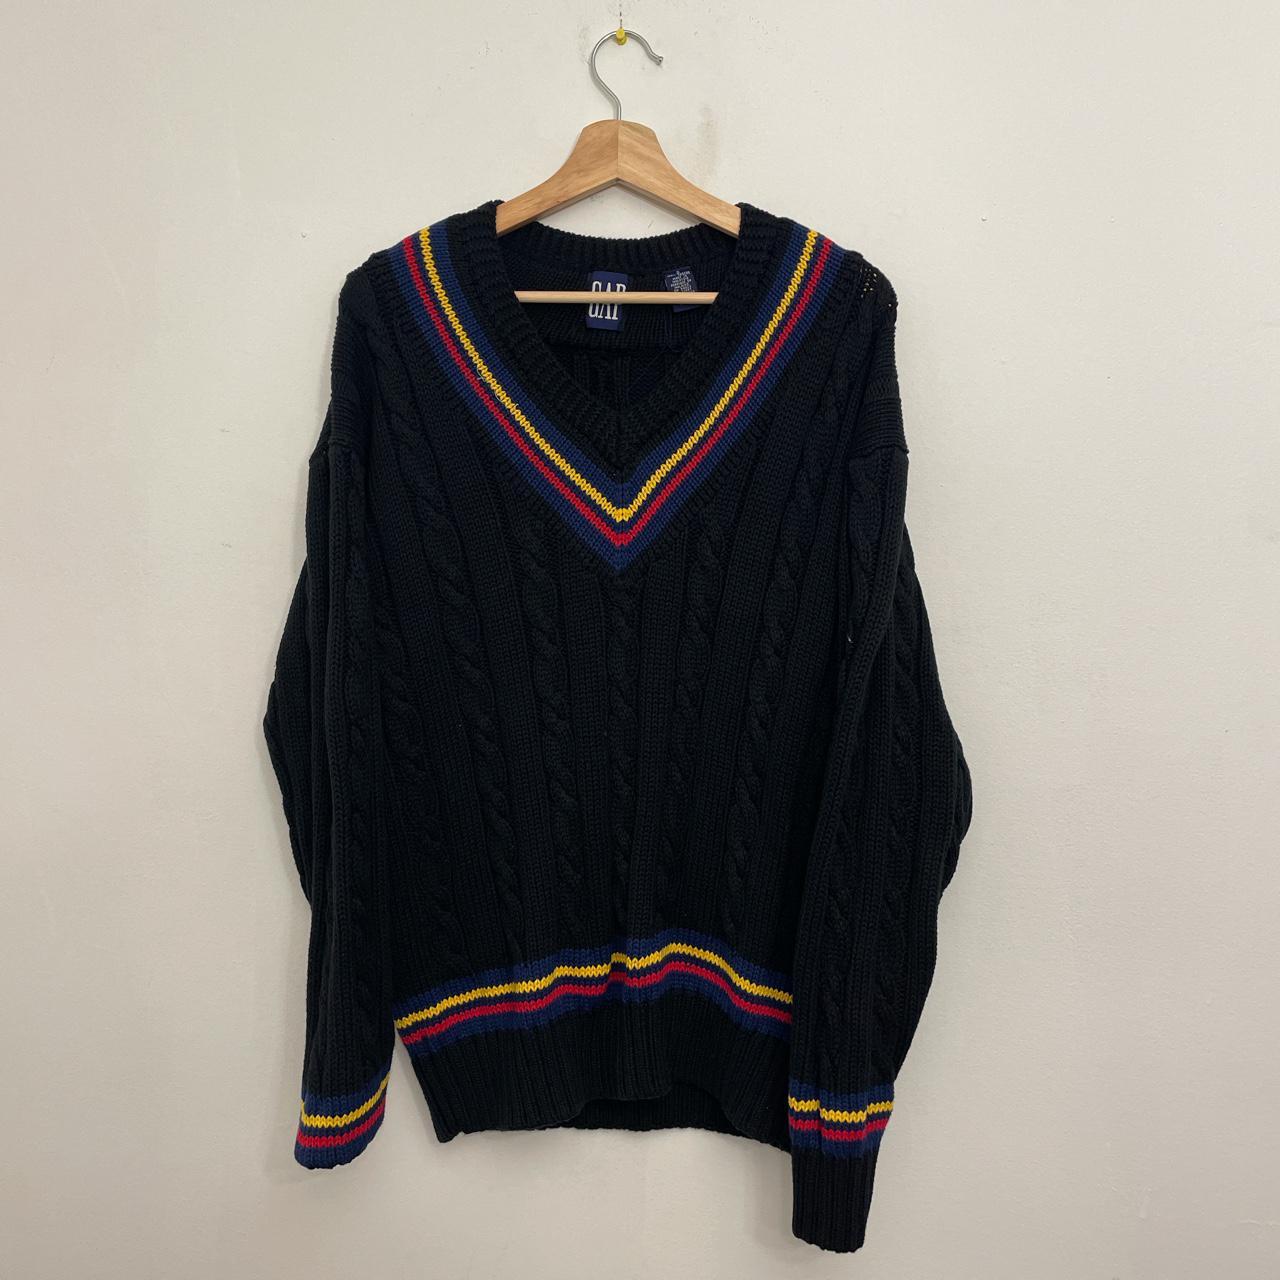 Product Image 1 - Vintage Gap Sweater 
100% Cotton